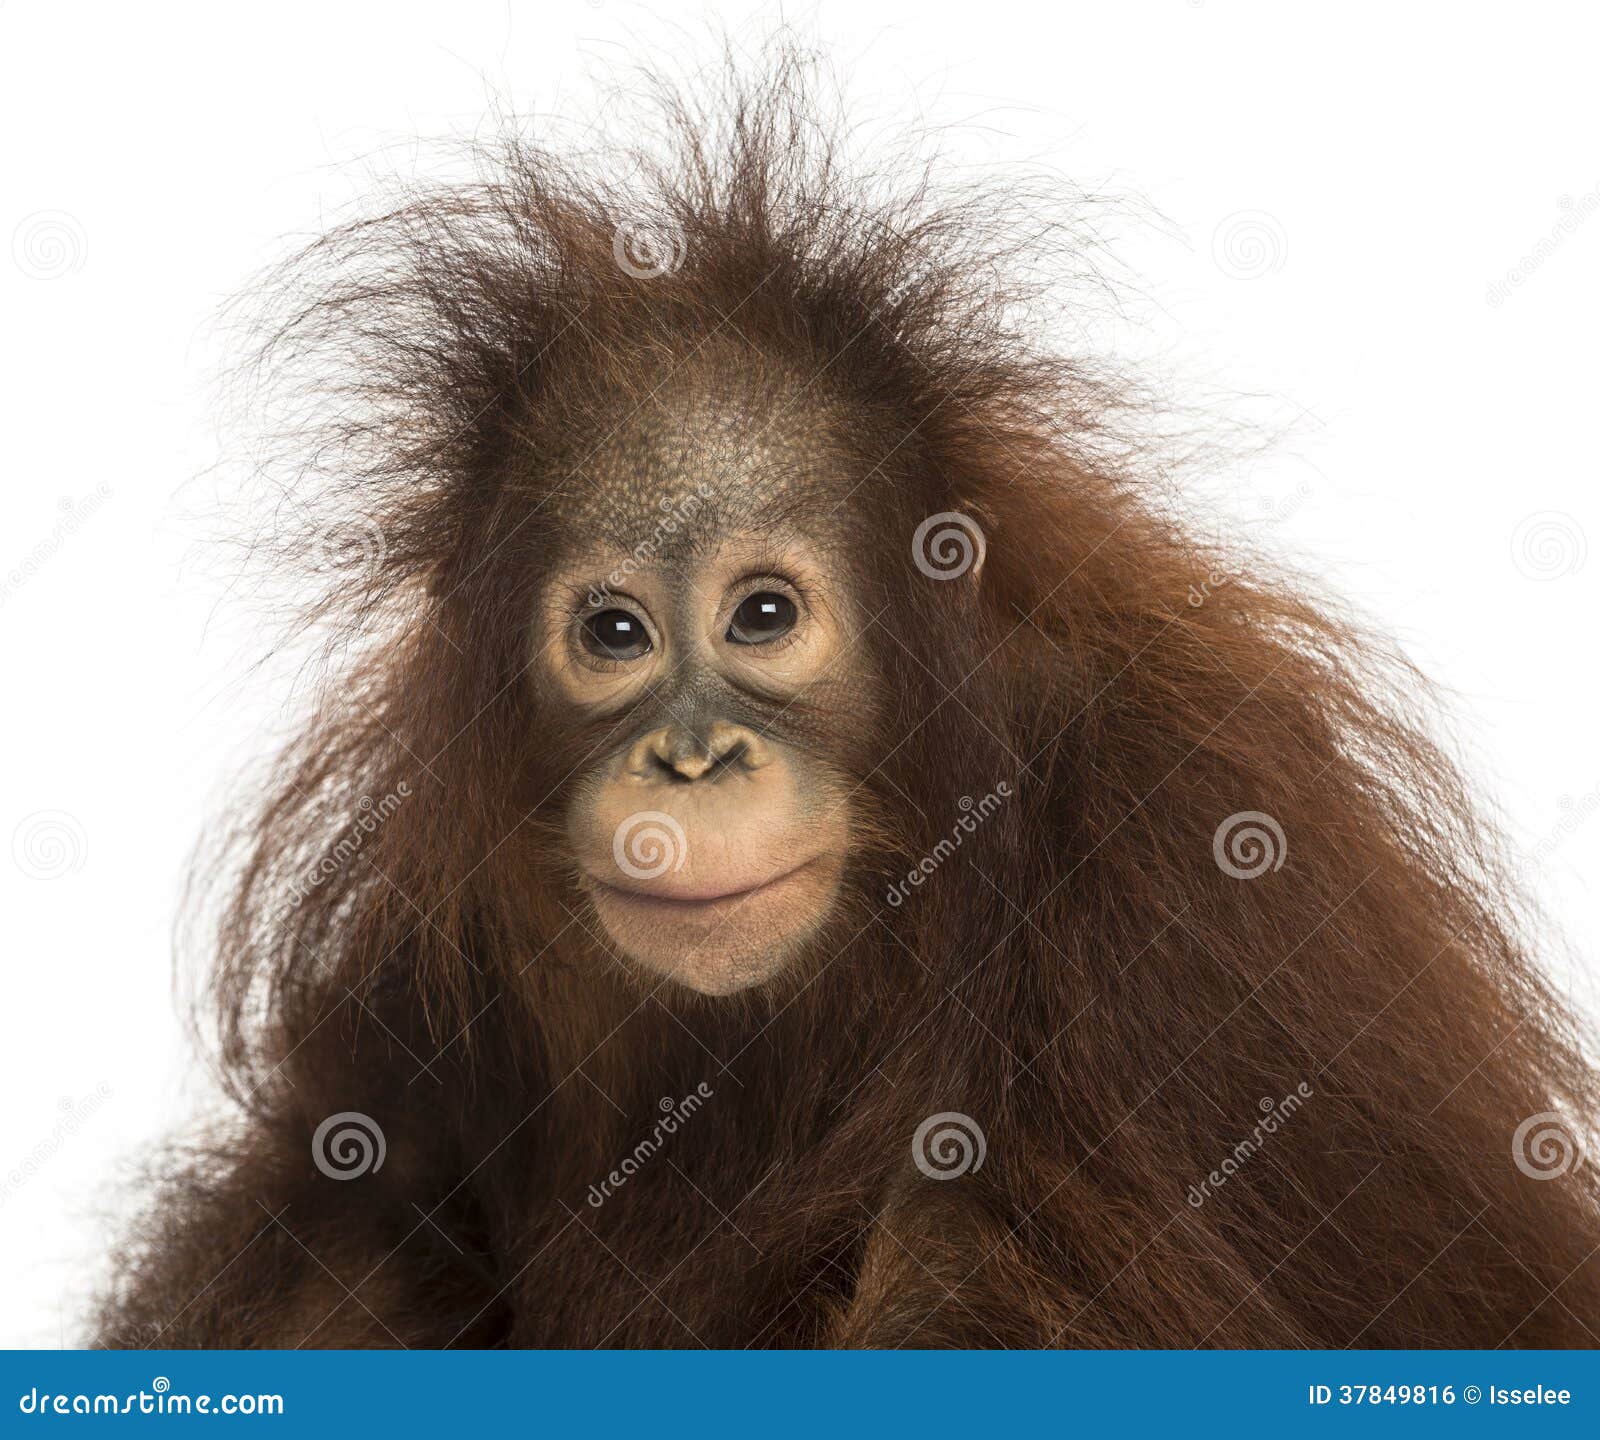 young bornean orangutan looking at the camera, pongo pygmaeus